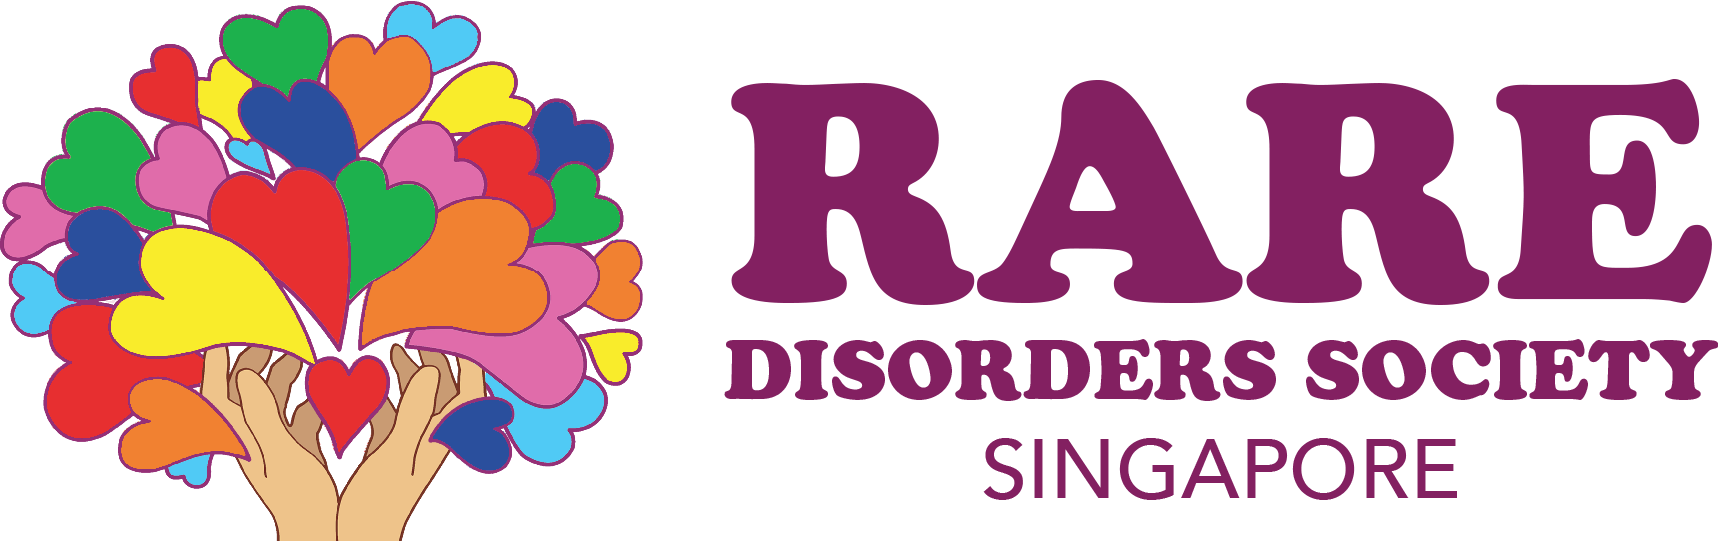 RDSS_logo_purple.png